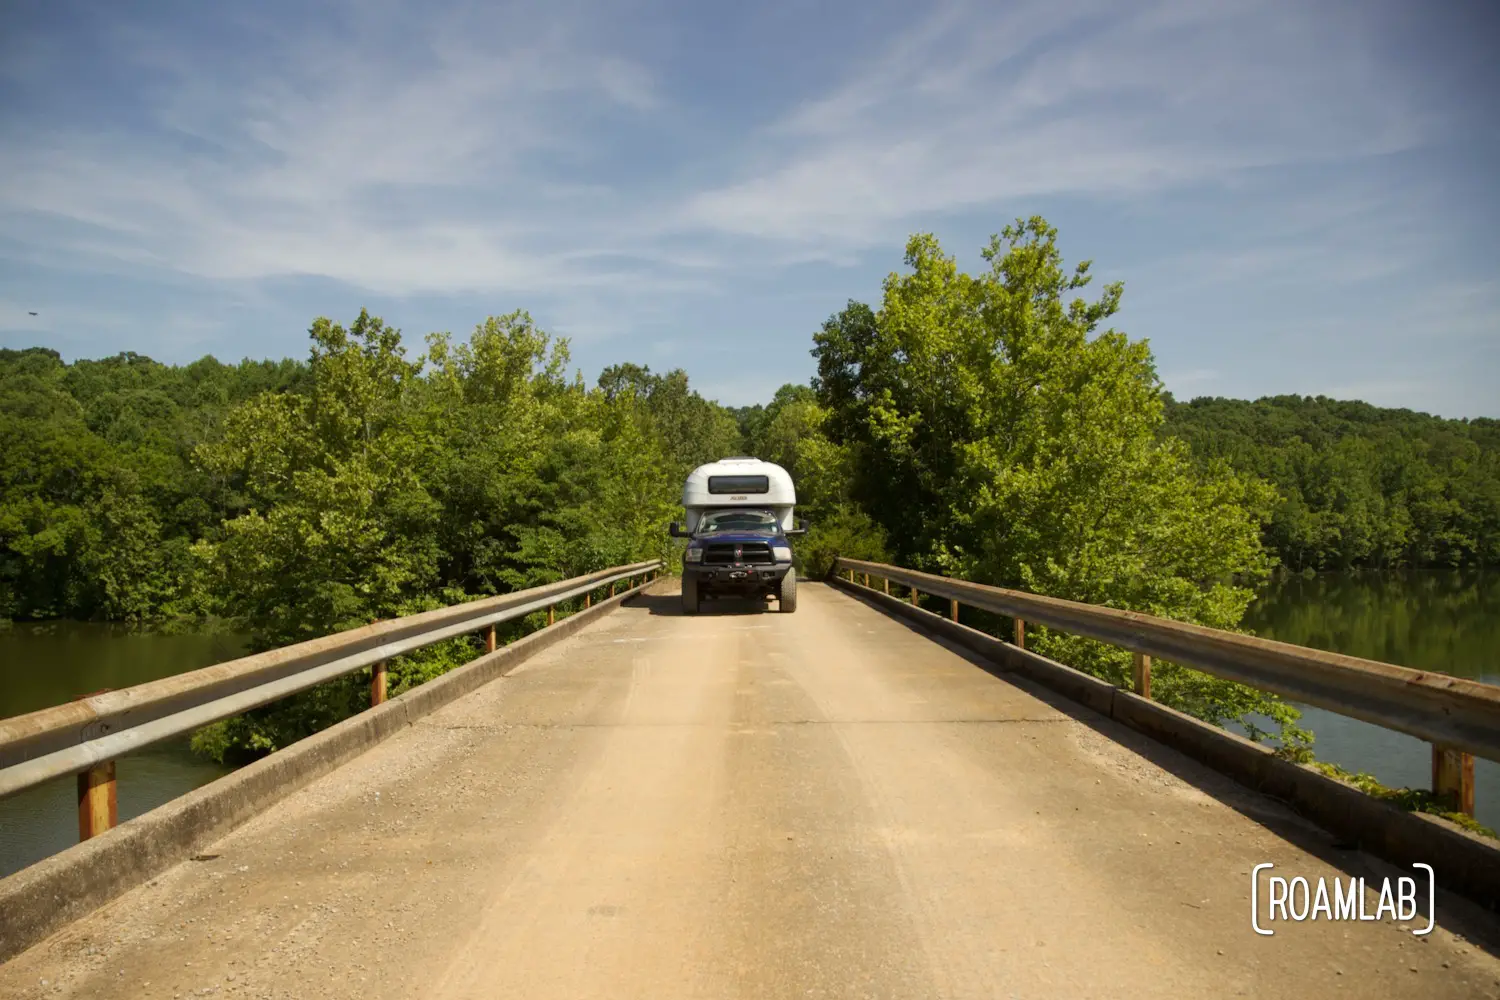 Avion C11 truck camper crossing a cement bridge.